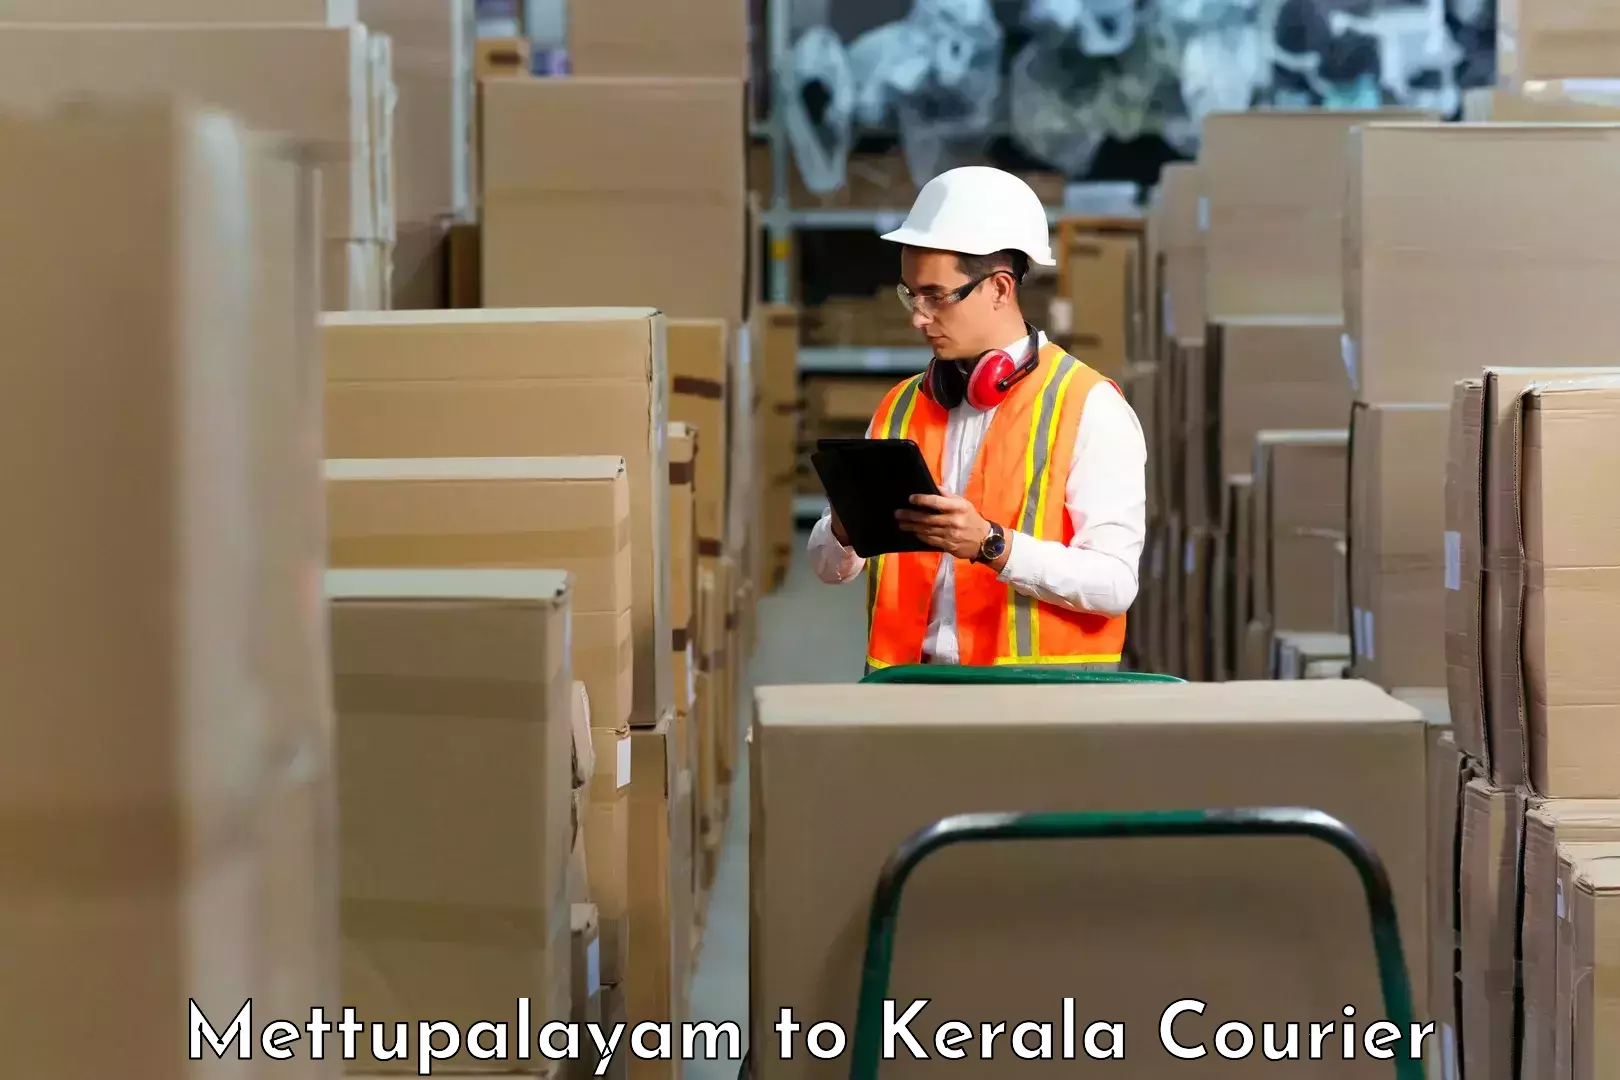 User-friendly courier app Mettupalayam to Kerala